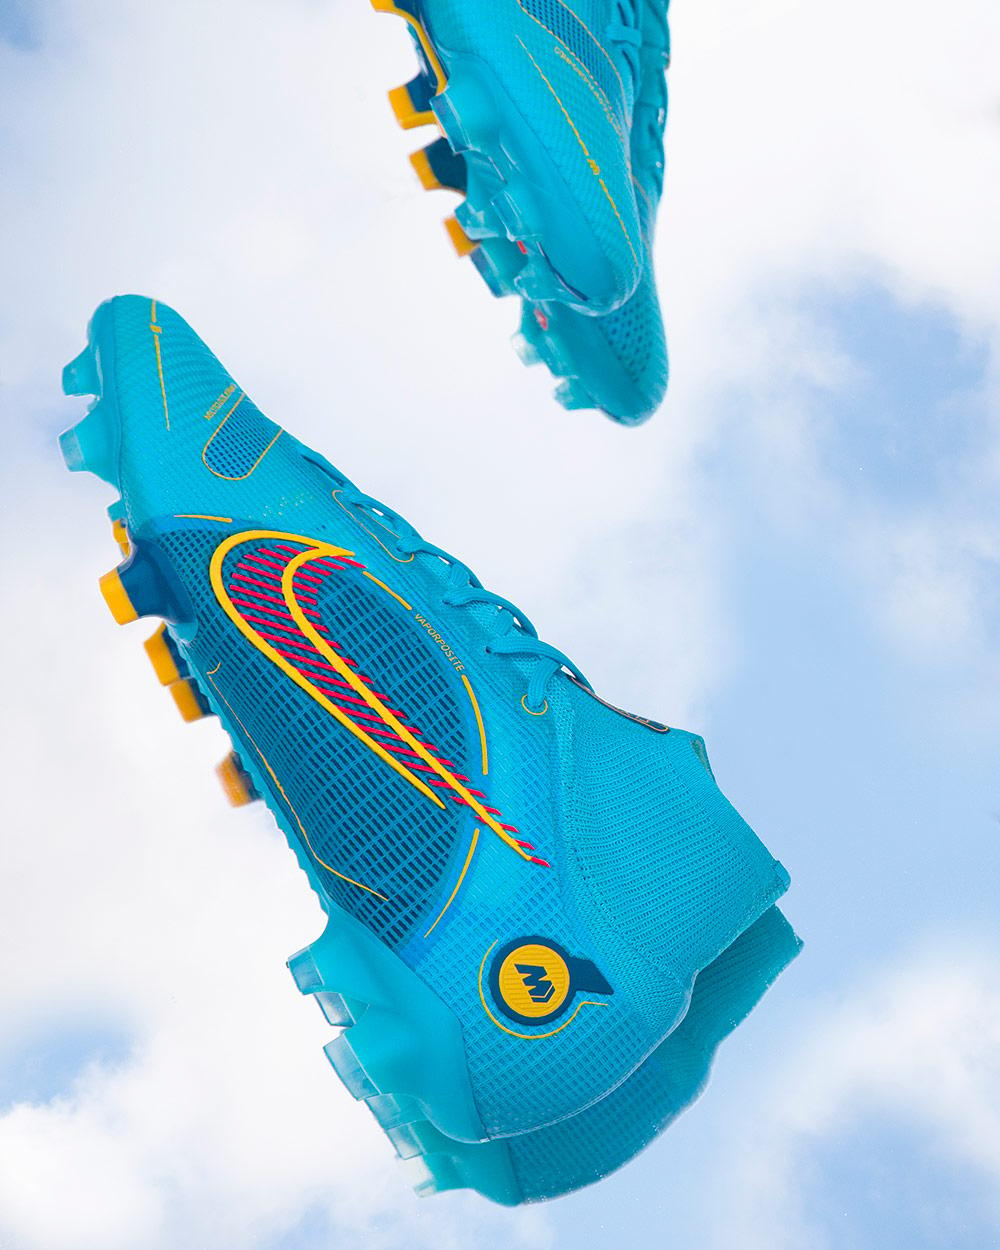 Nike Mercurial Blueprint Superfly and Vapor First Look | SOCCER.COM